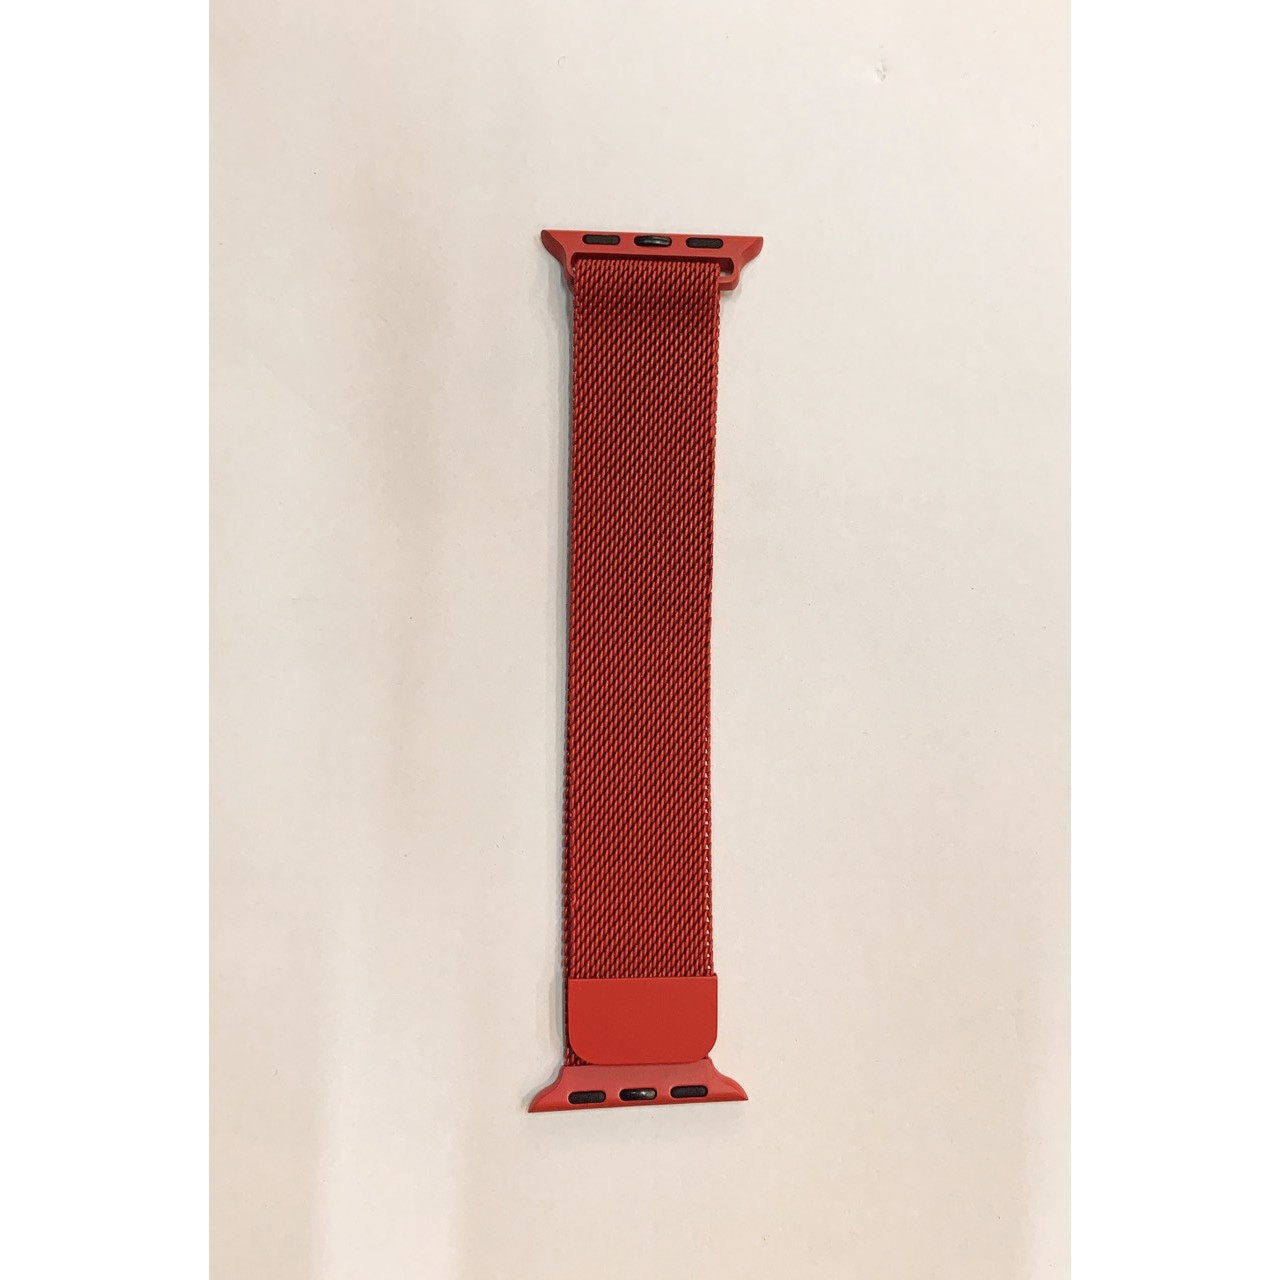 Dây đeo cho Apple Watch Milanese Loop đủ size - Đỏ - 38,40,42,44mm